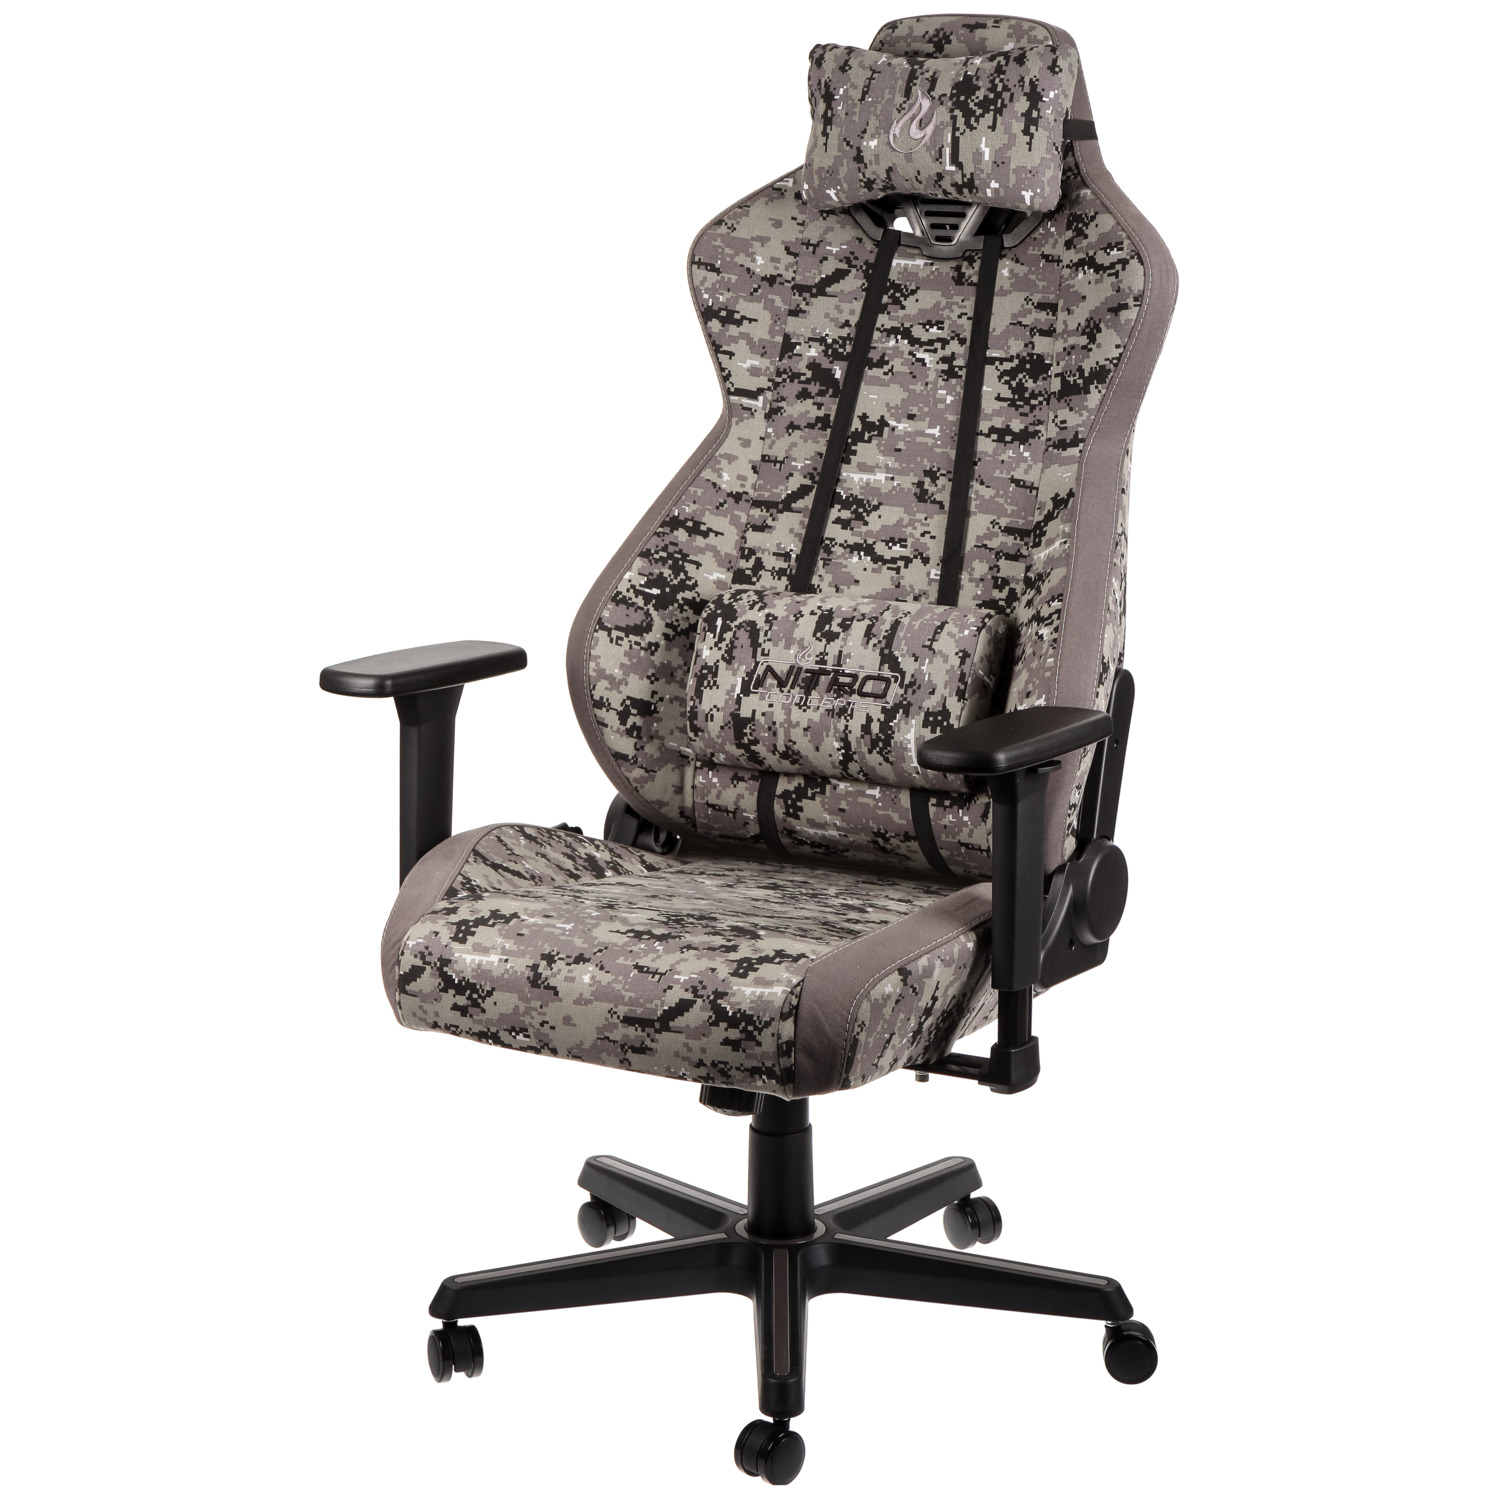  - S300 Gaming Chair Urban Camo